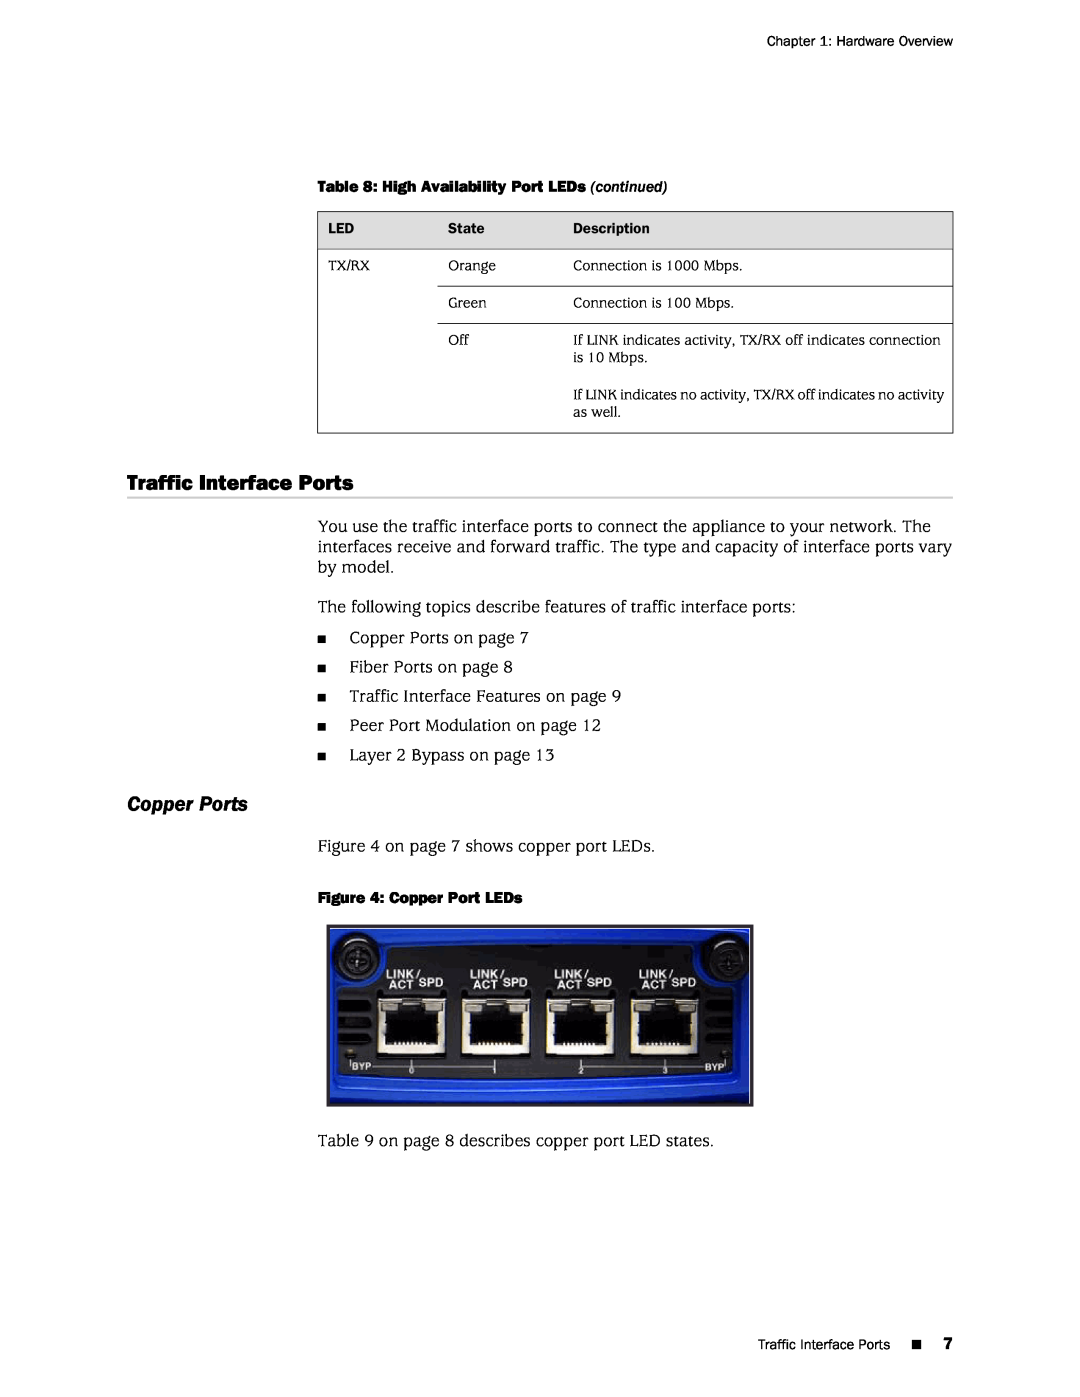 Juniper Networks IDP250 manual Traffic Interface Ports, Copper Ports 